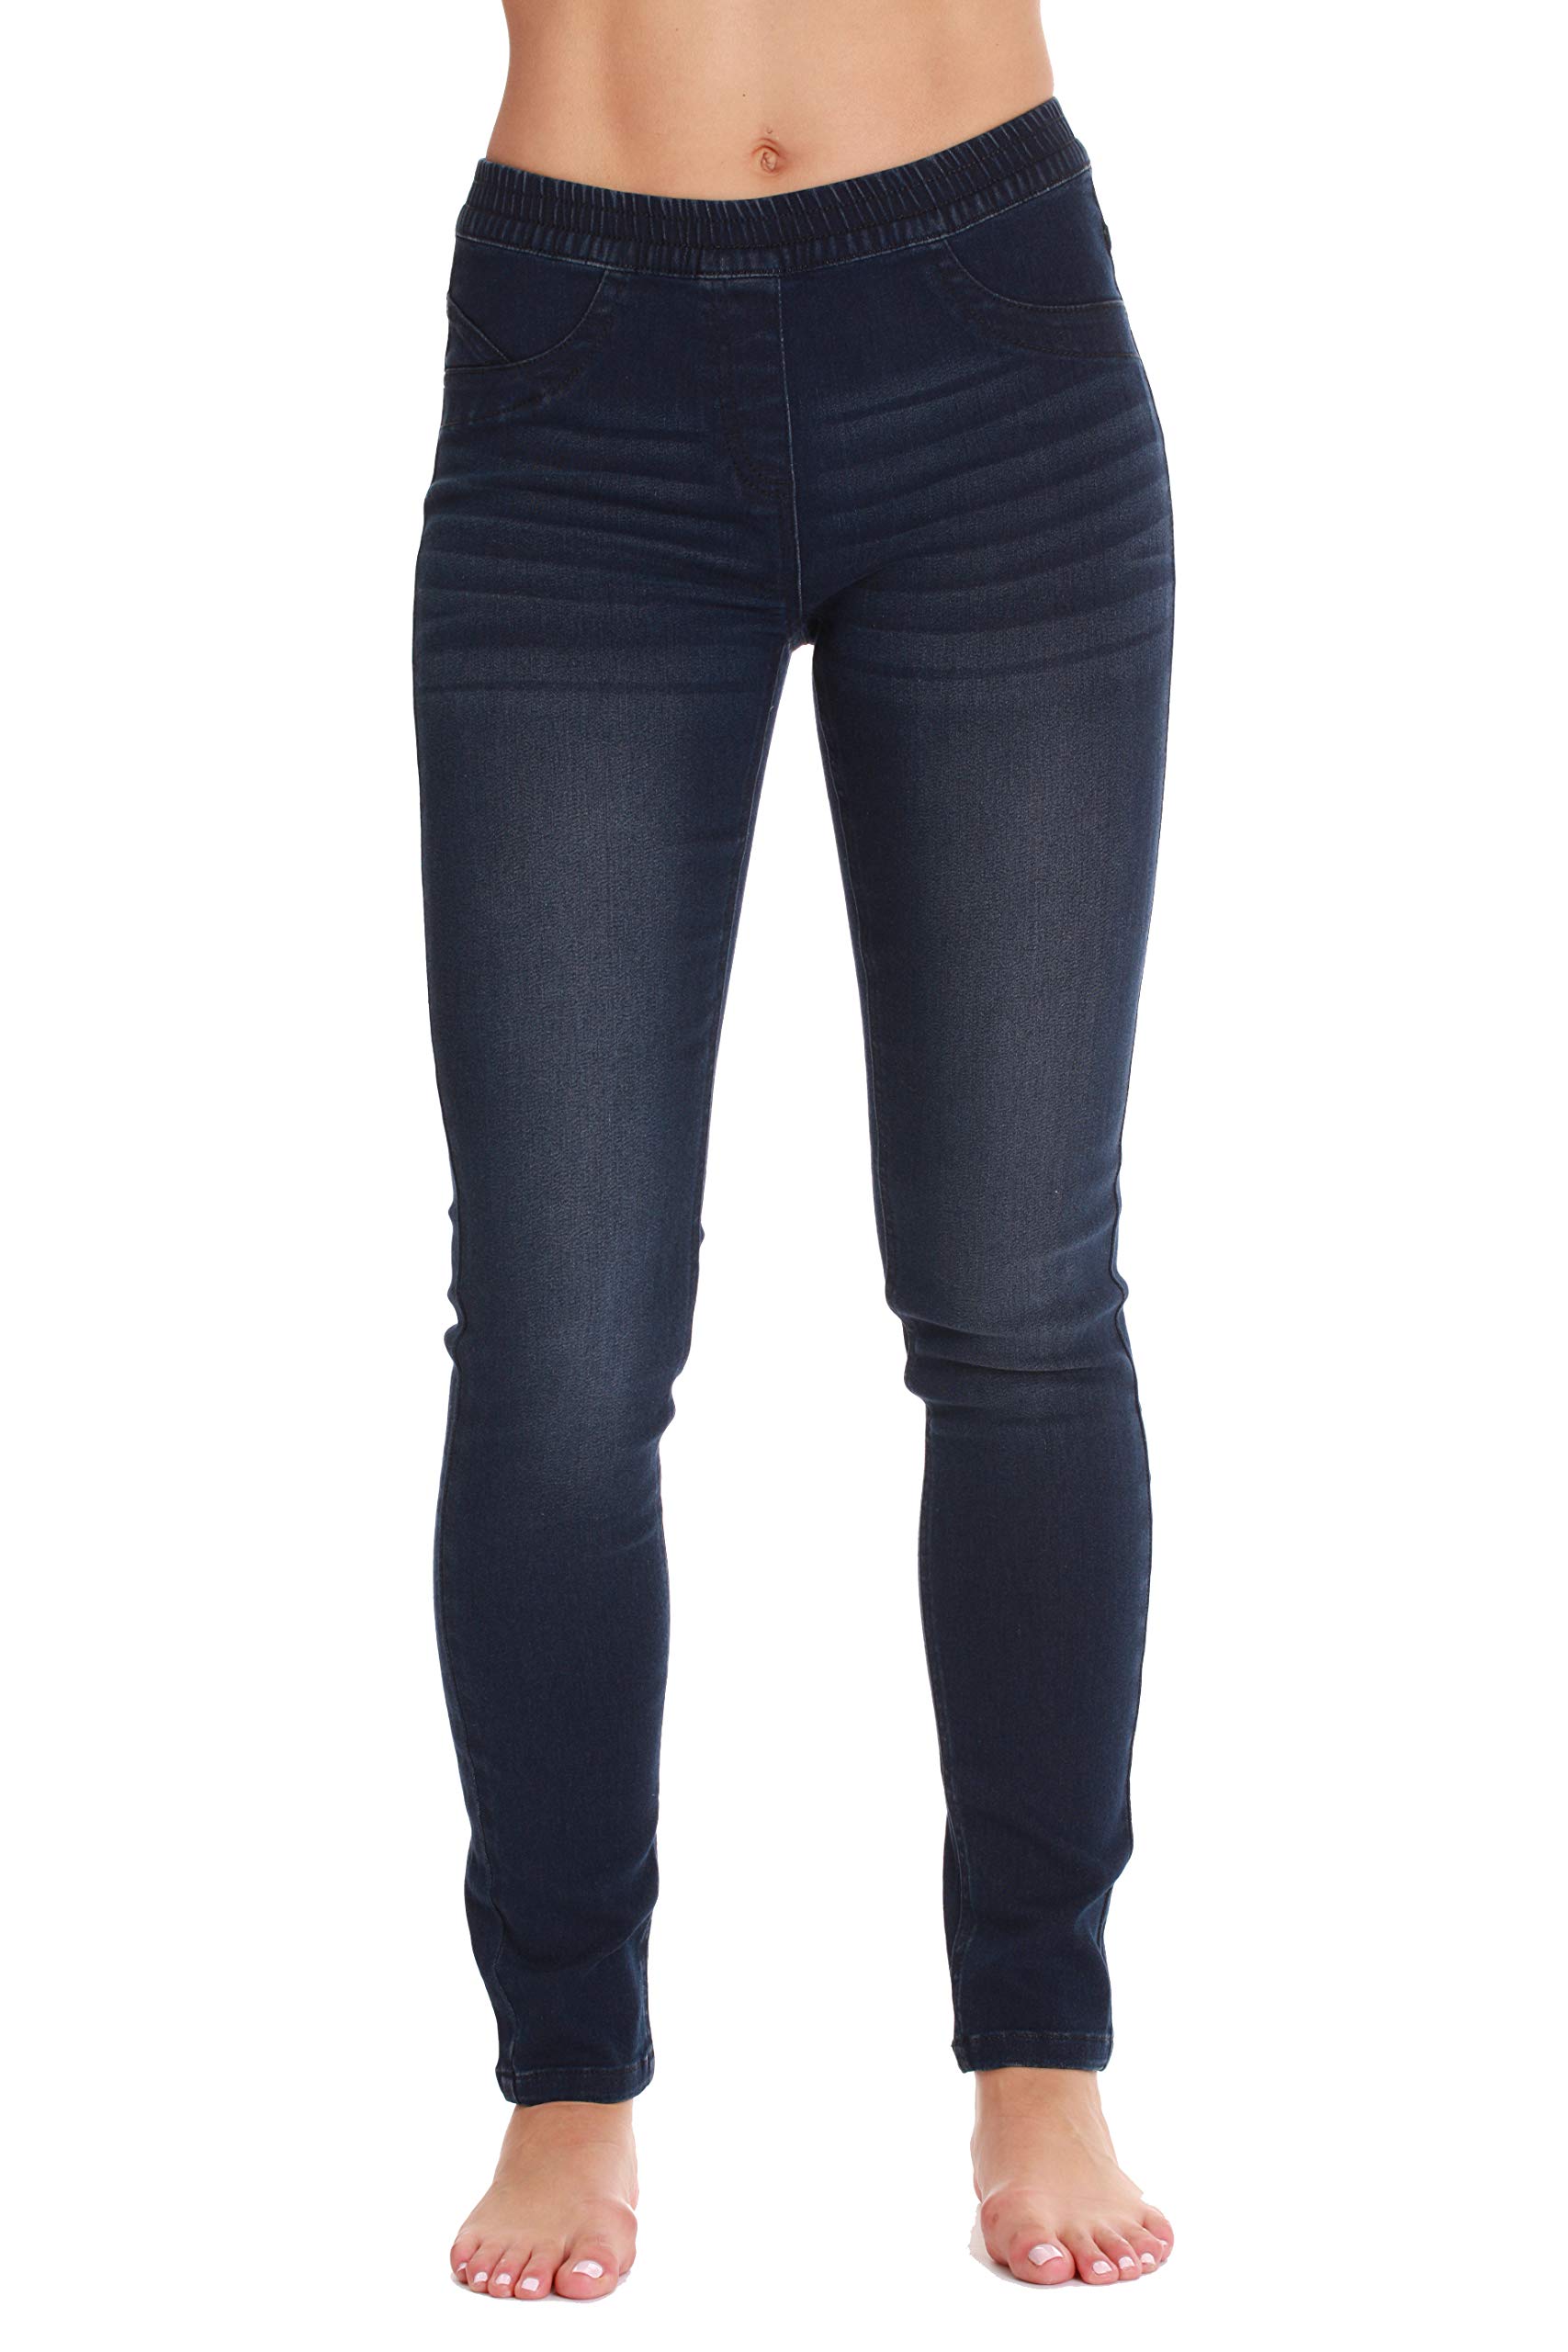 Just Love Women's Denim Jeggings with Pockets - Comfortable Stretch Jeans Leggings (Dark Denim, Large) - image 1 of 3